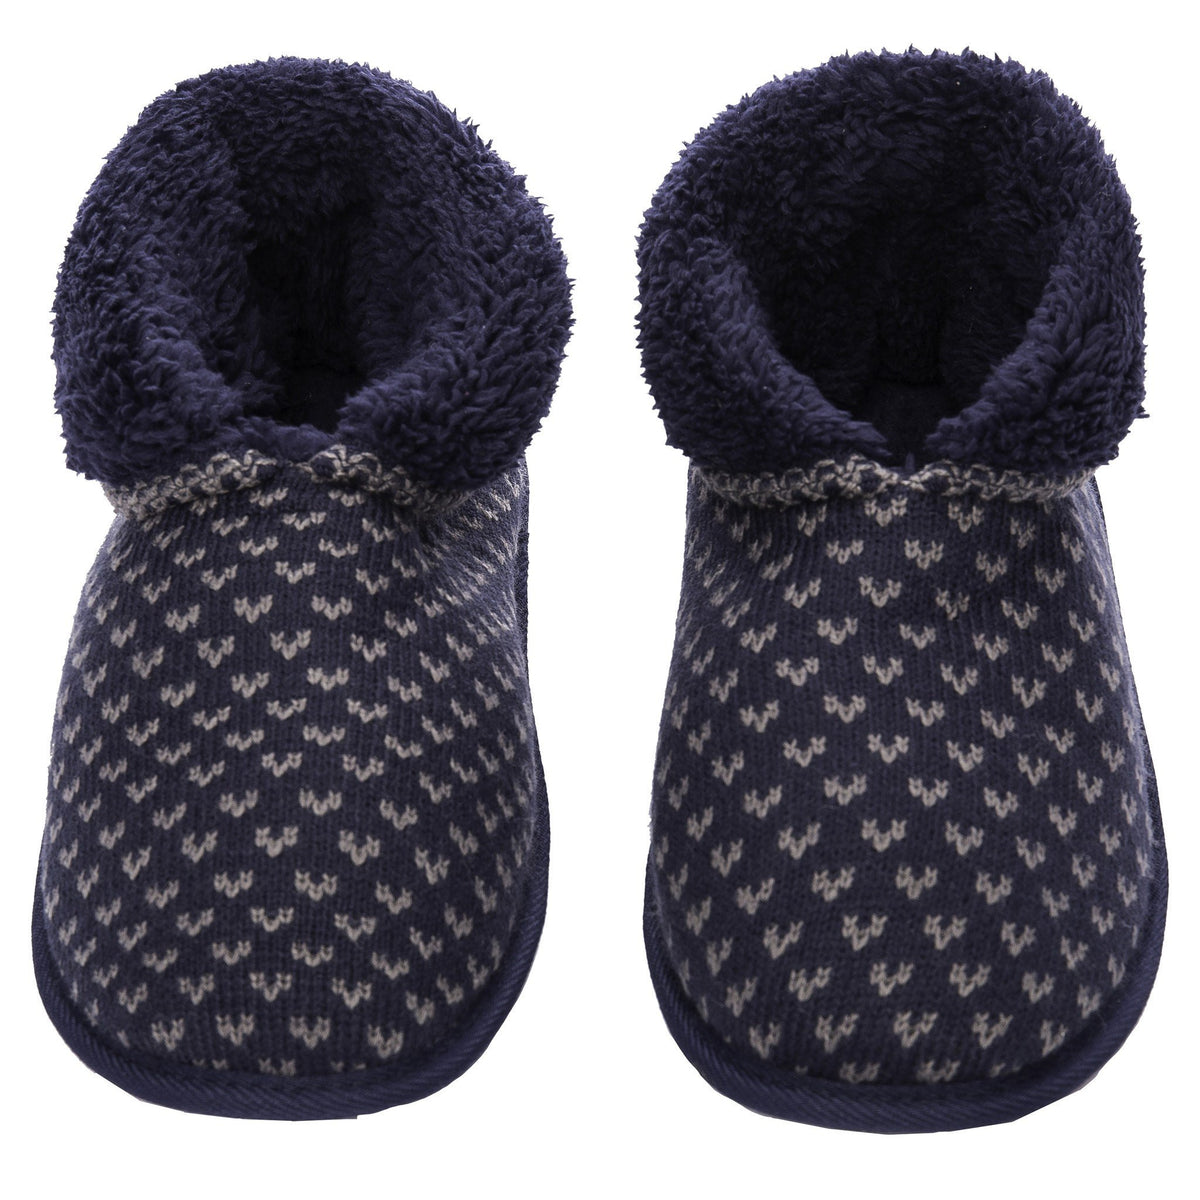 Men's Premium Knit Short Boot Slipper - Navy/Charcoal